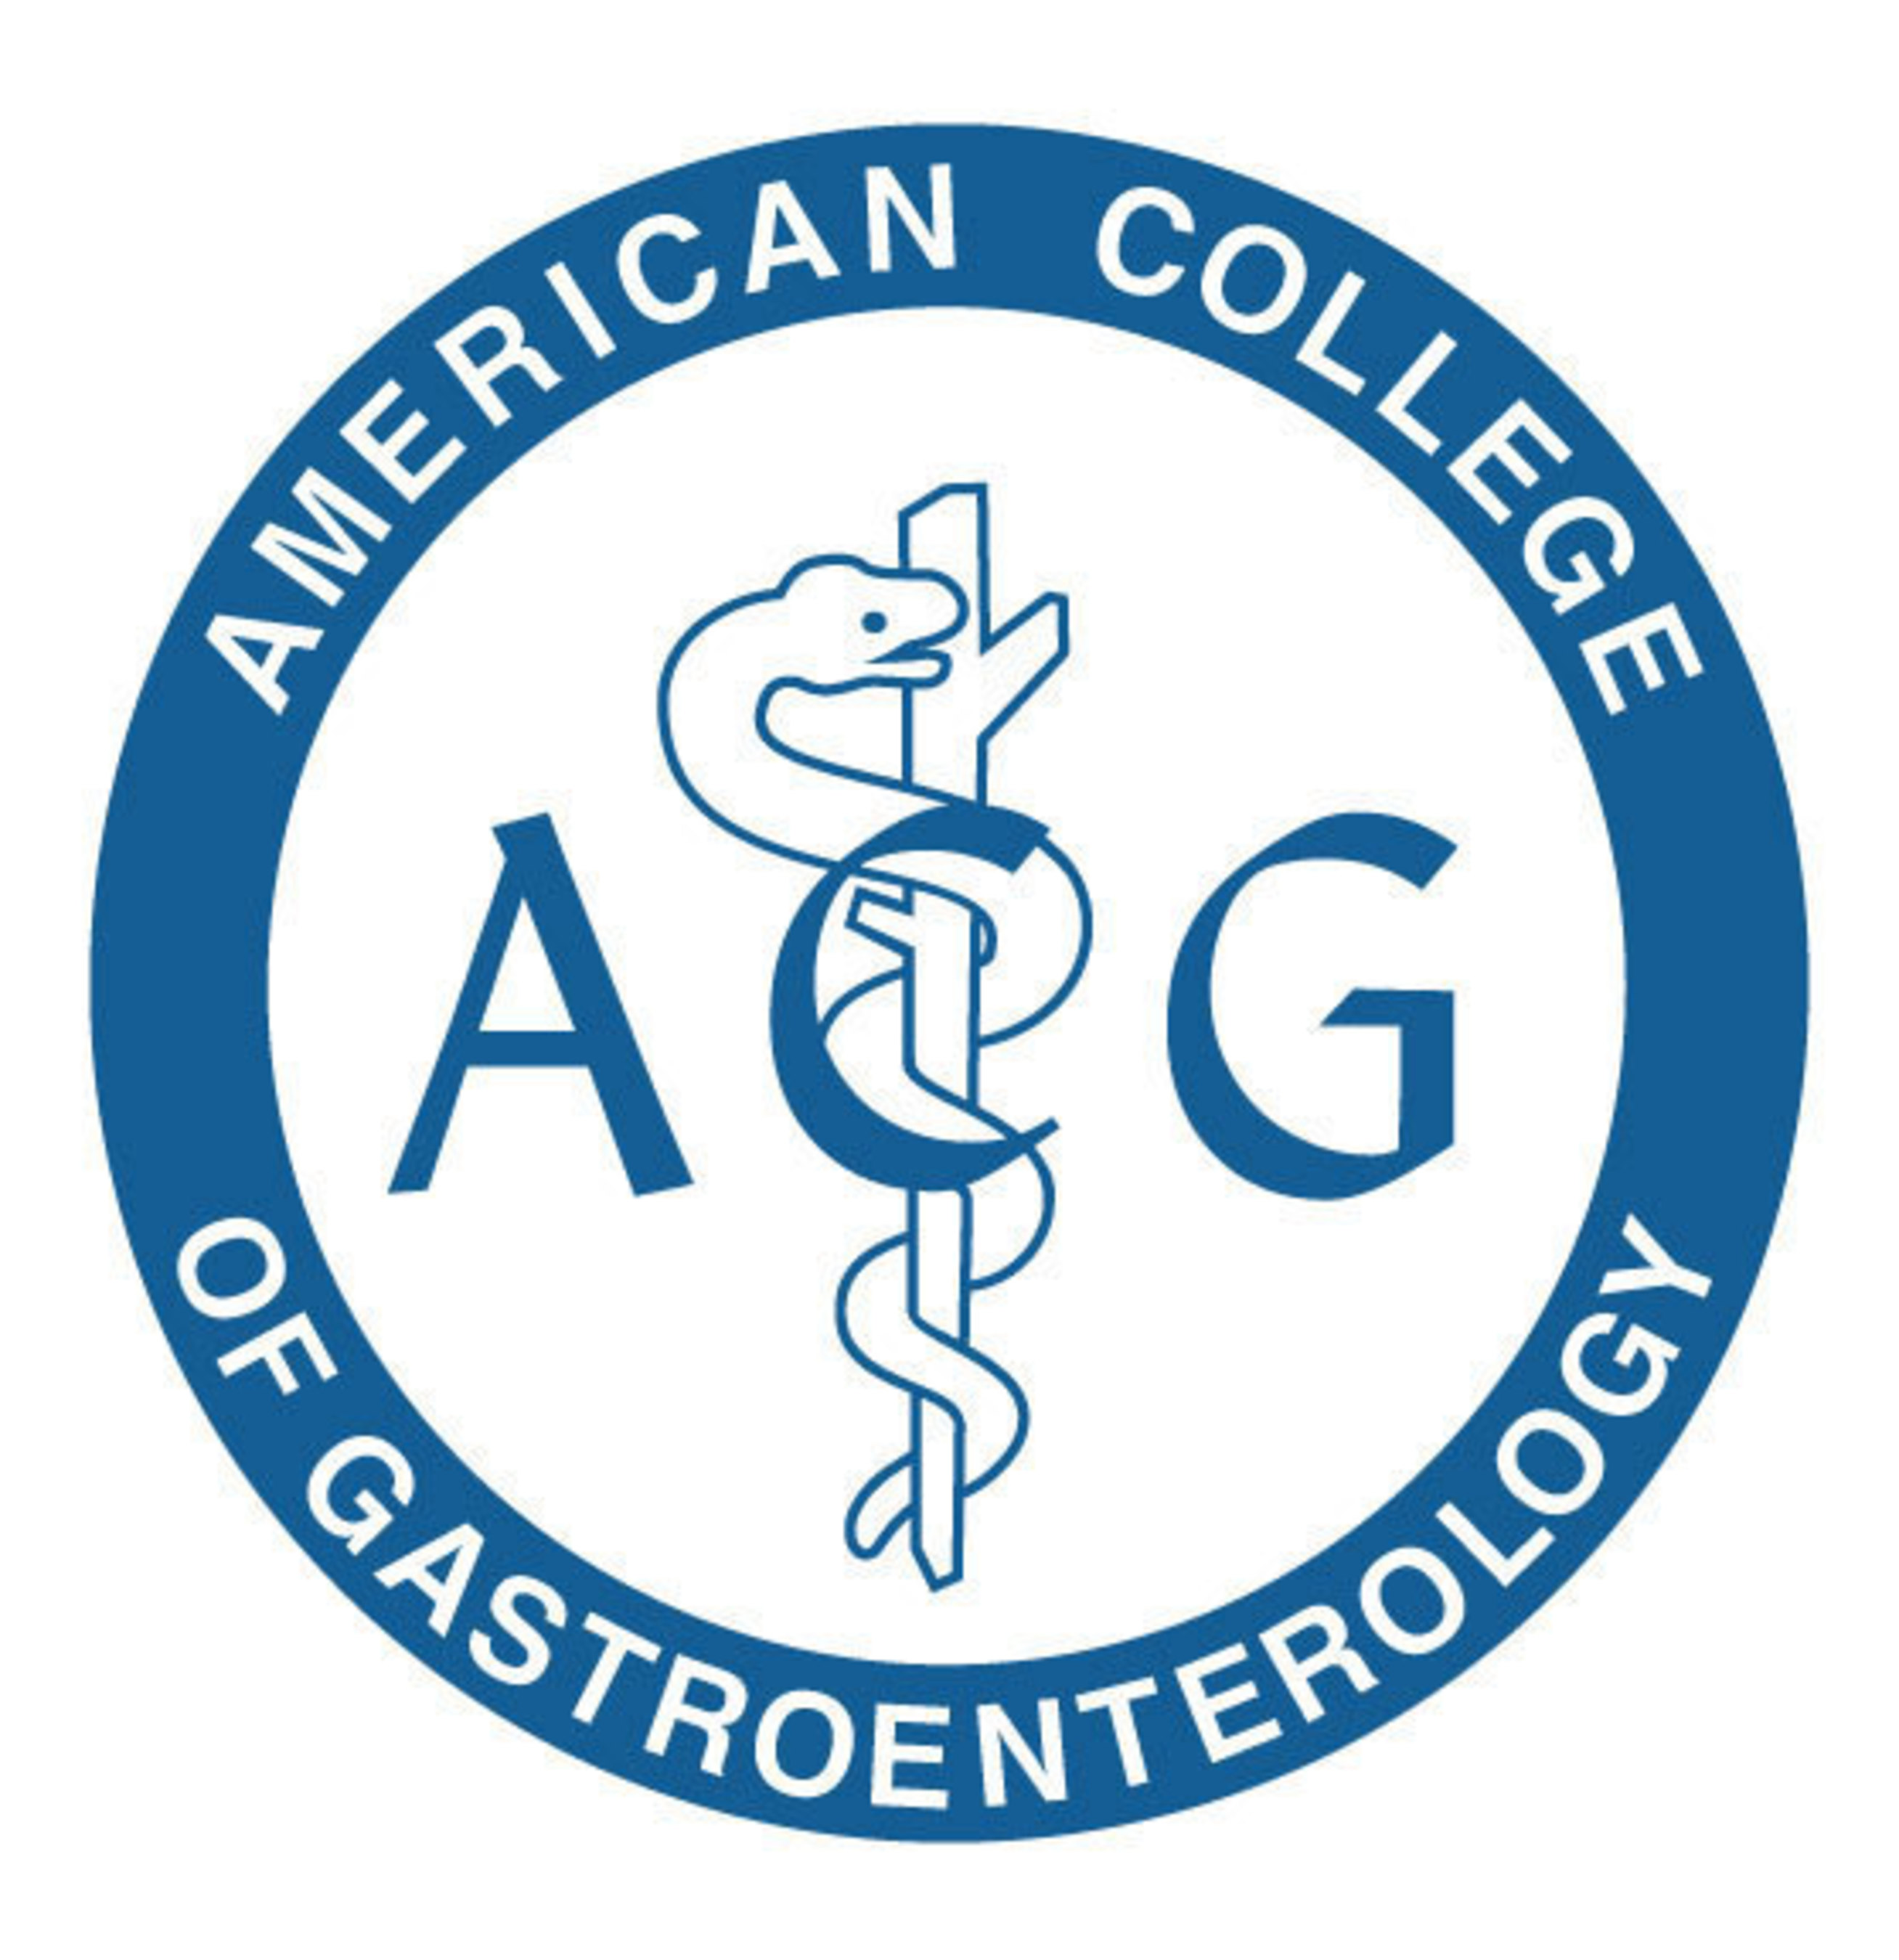 American College of Gastroenterology (PRNewsFoto/American College of Gastroent...)